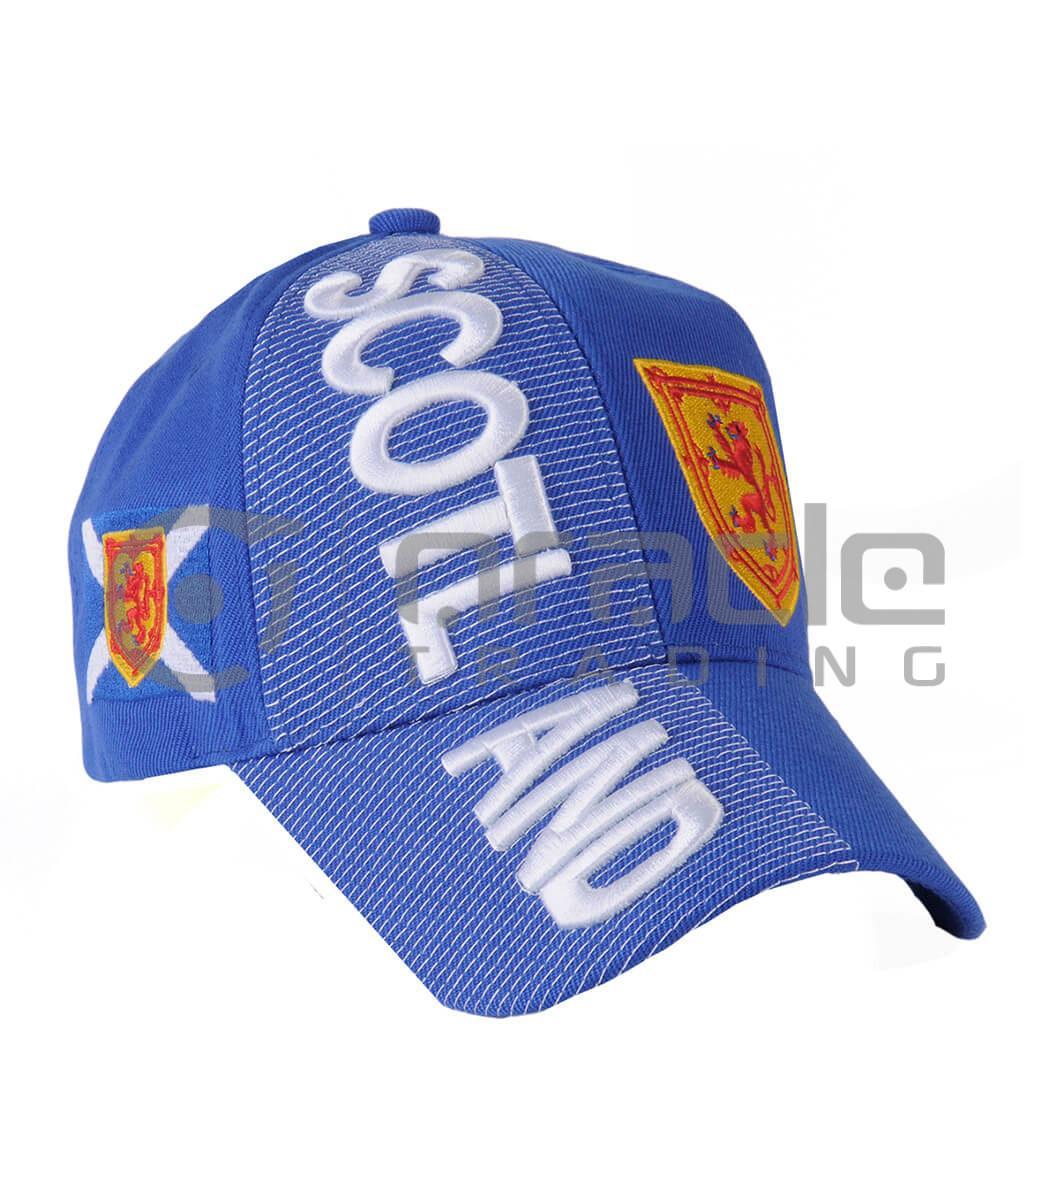 3D Scotland Hat - Rampant Lion